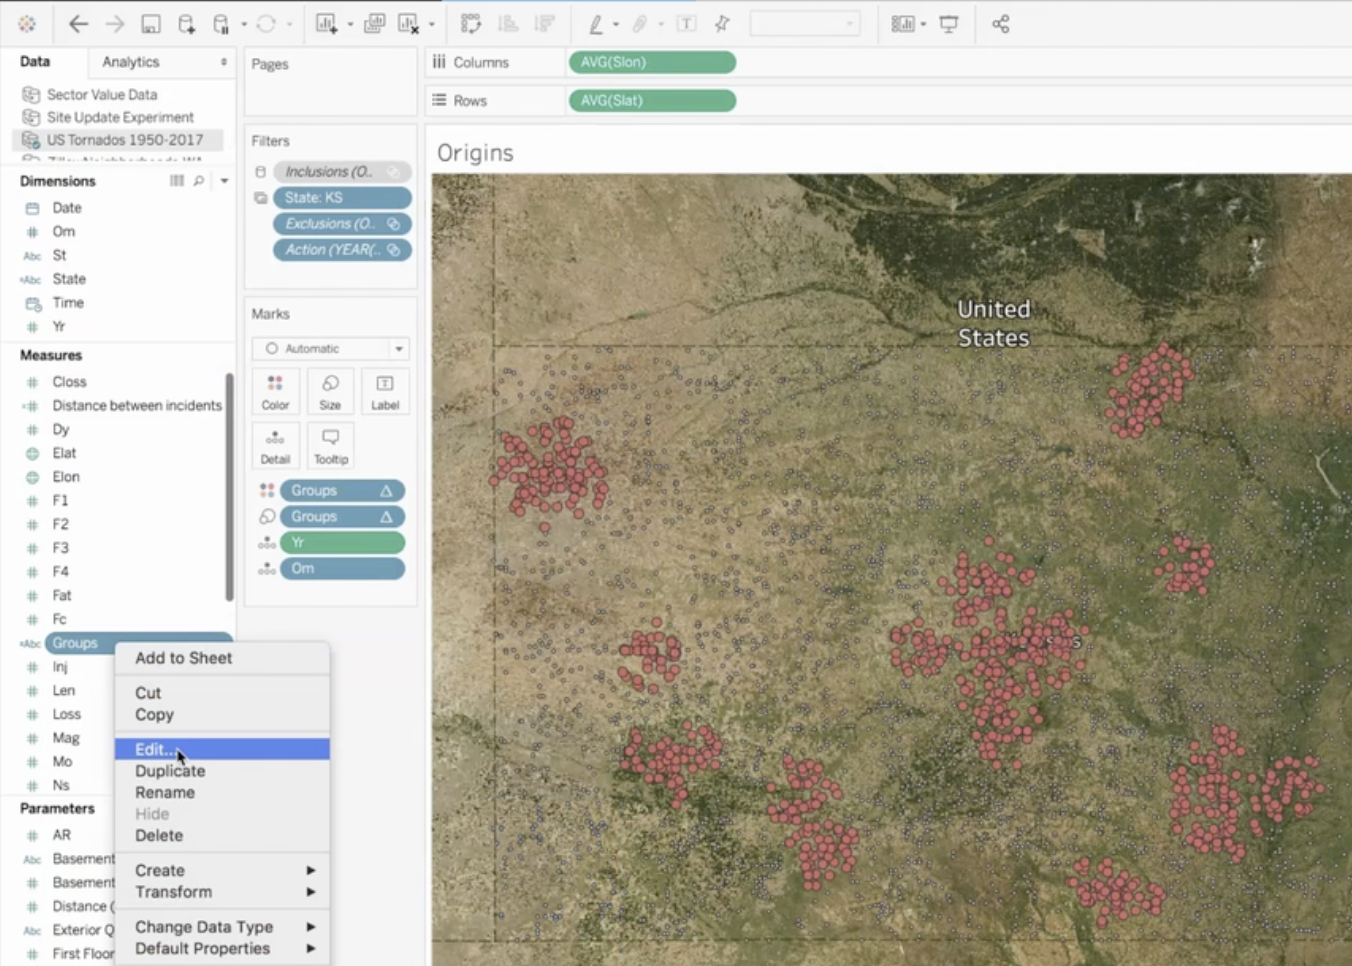 Tableau Desktop viz showing cluster of tornado origins